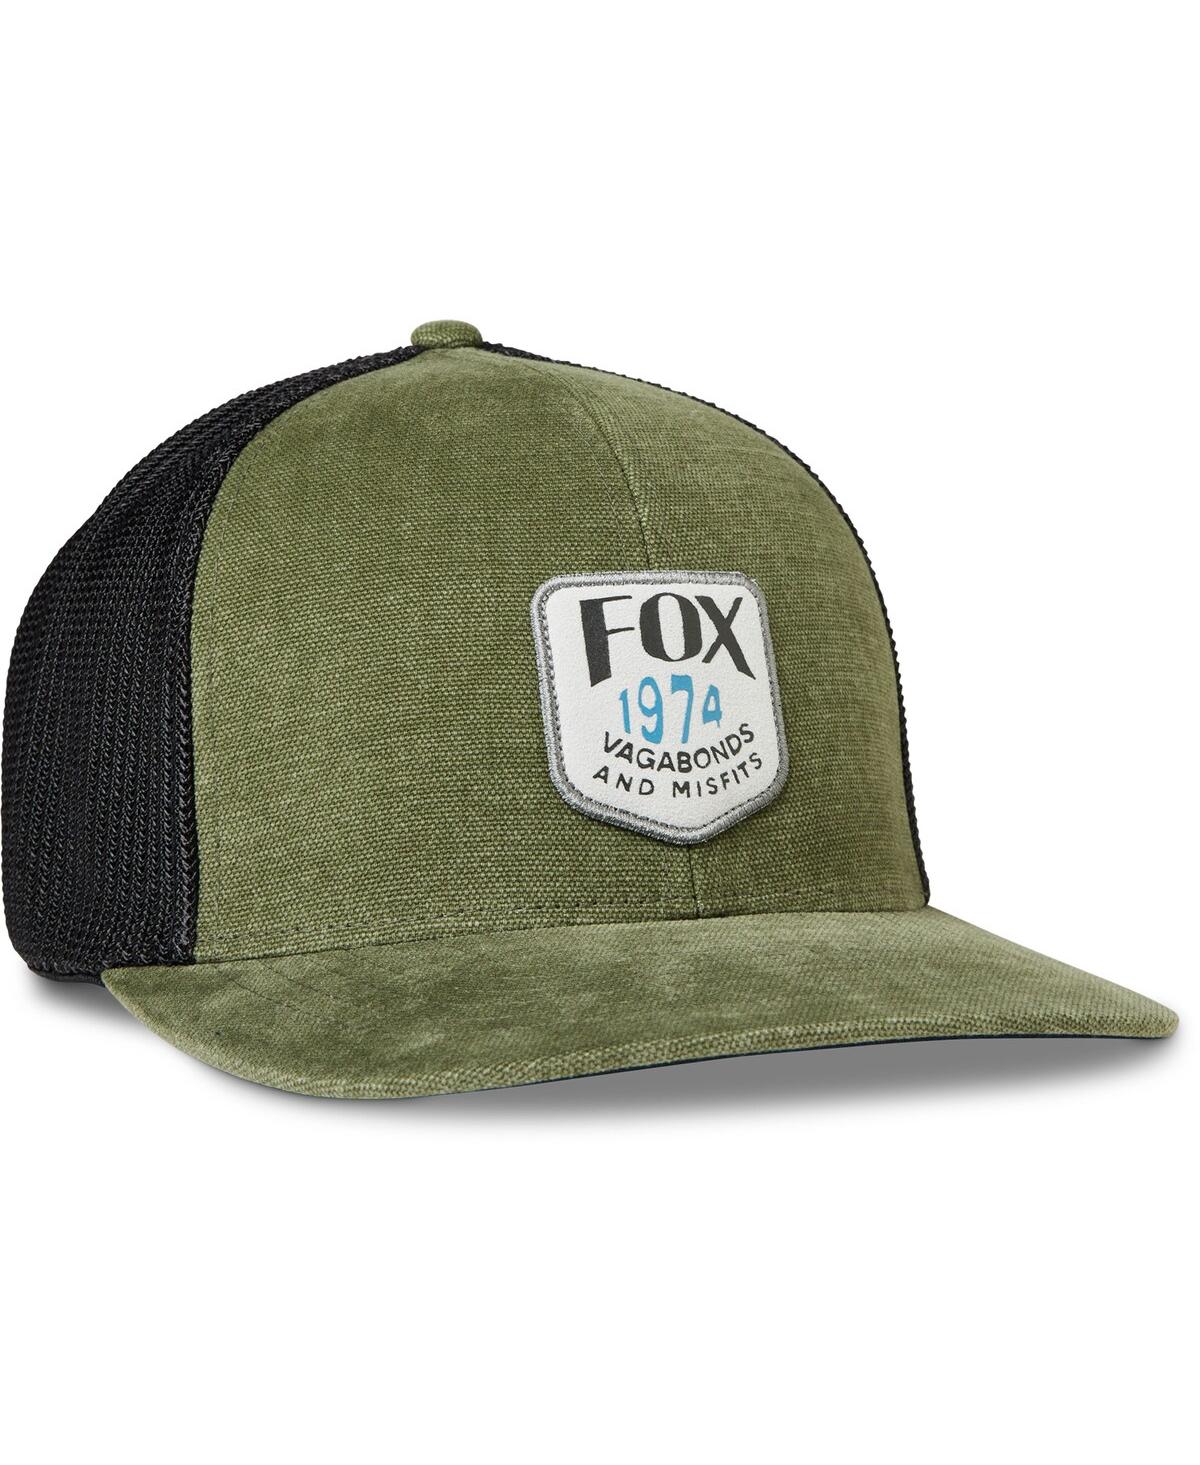 Men's Fox Olive Predominant Mesh Flexfit Flex Hat - Olive